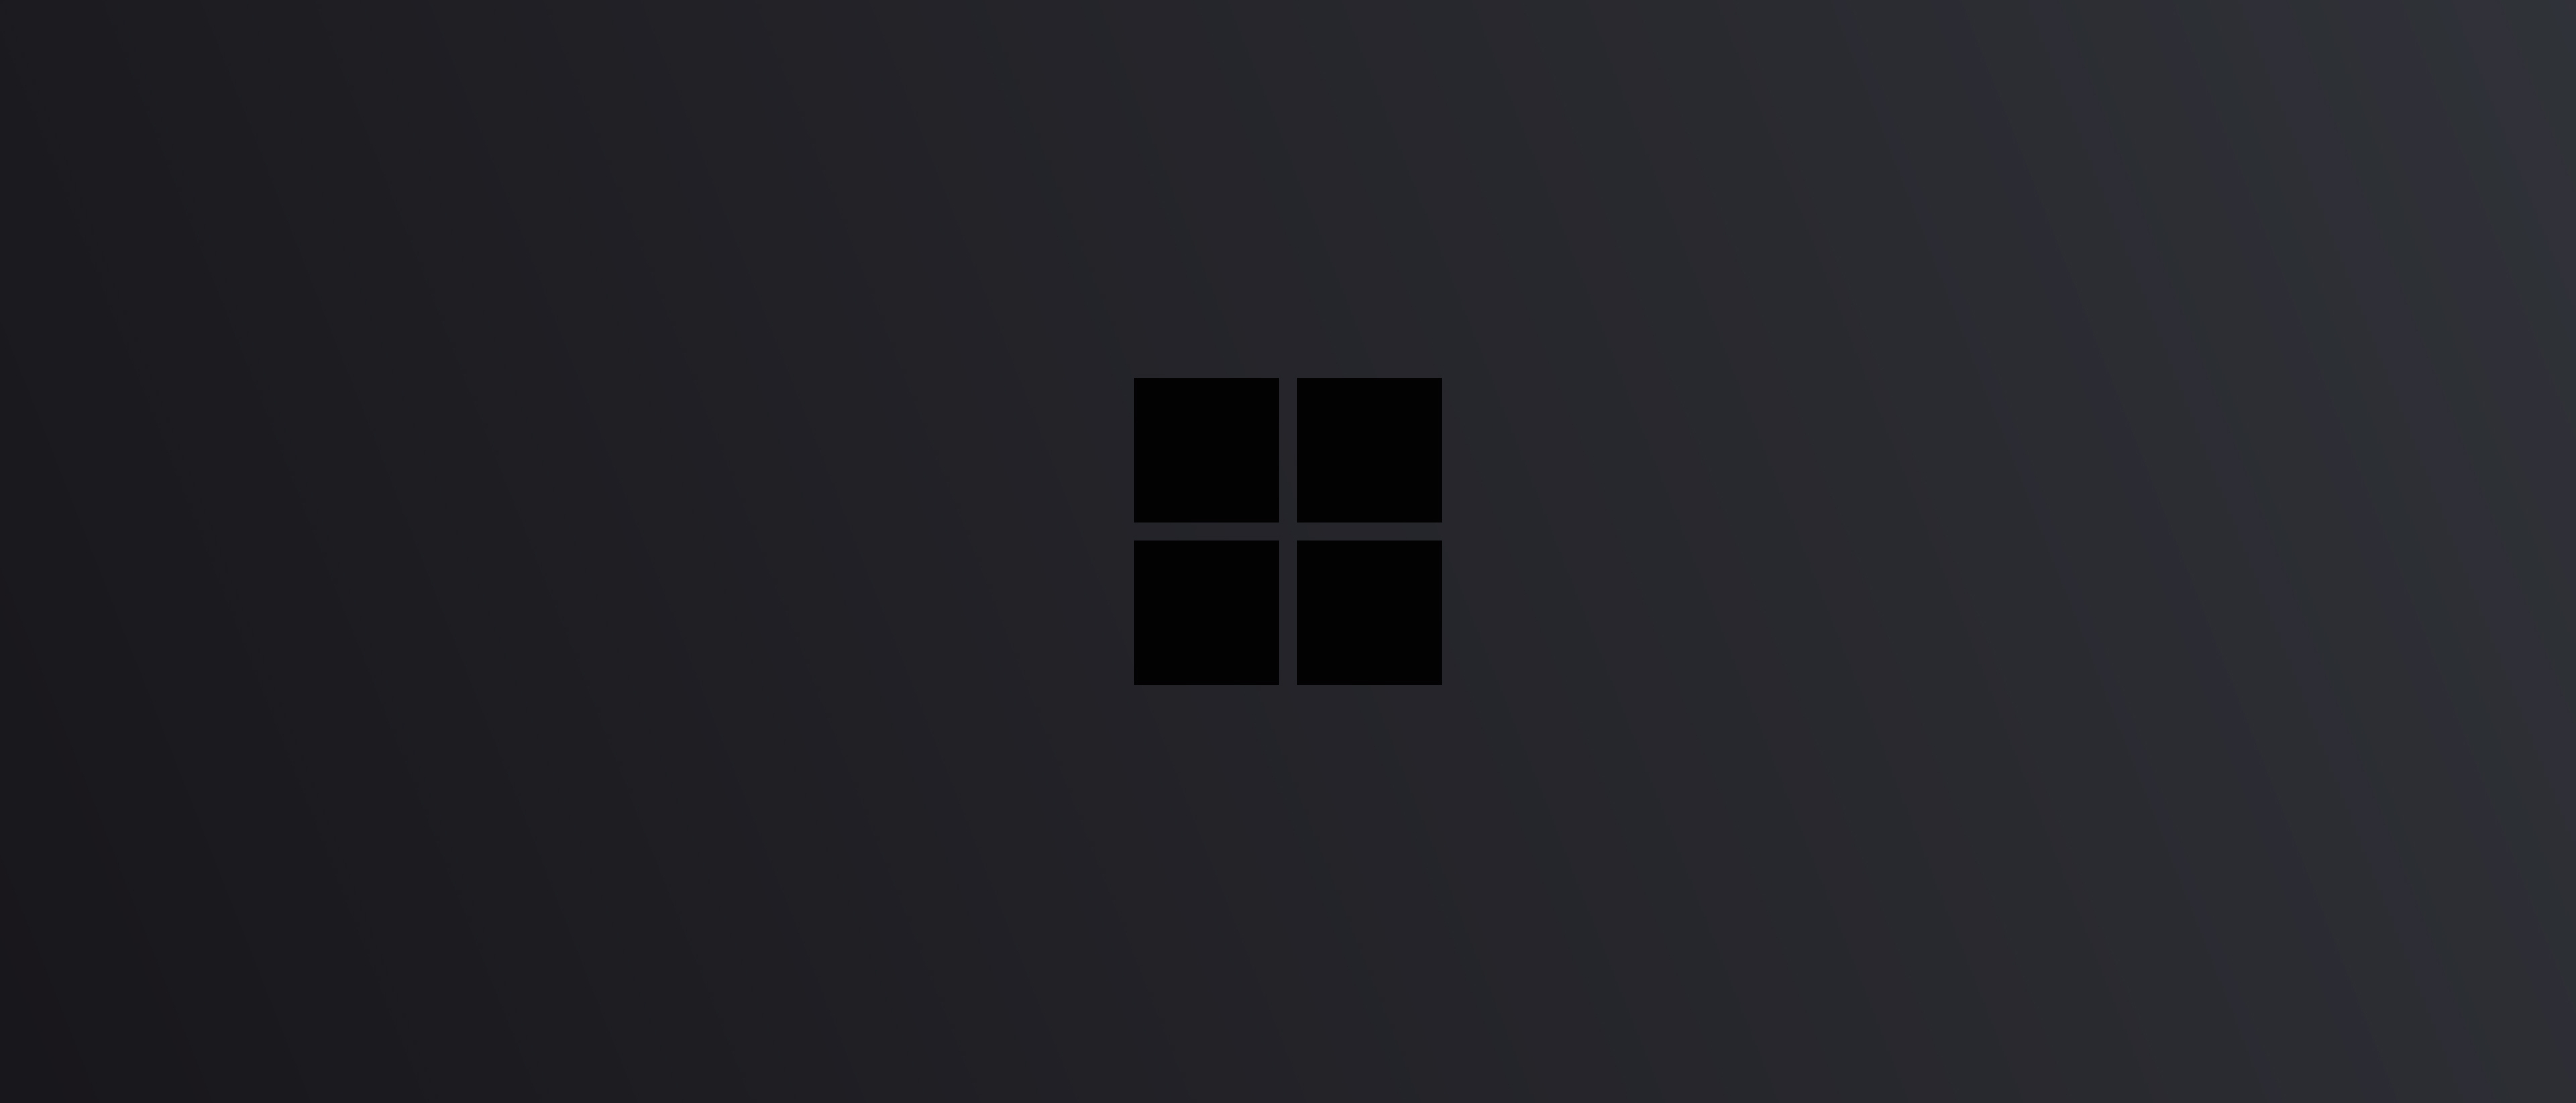 3840x1644 Resolution Windows 10 Logo Minimal Dark 3840x1644 Resolution ...